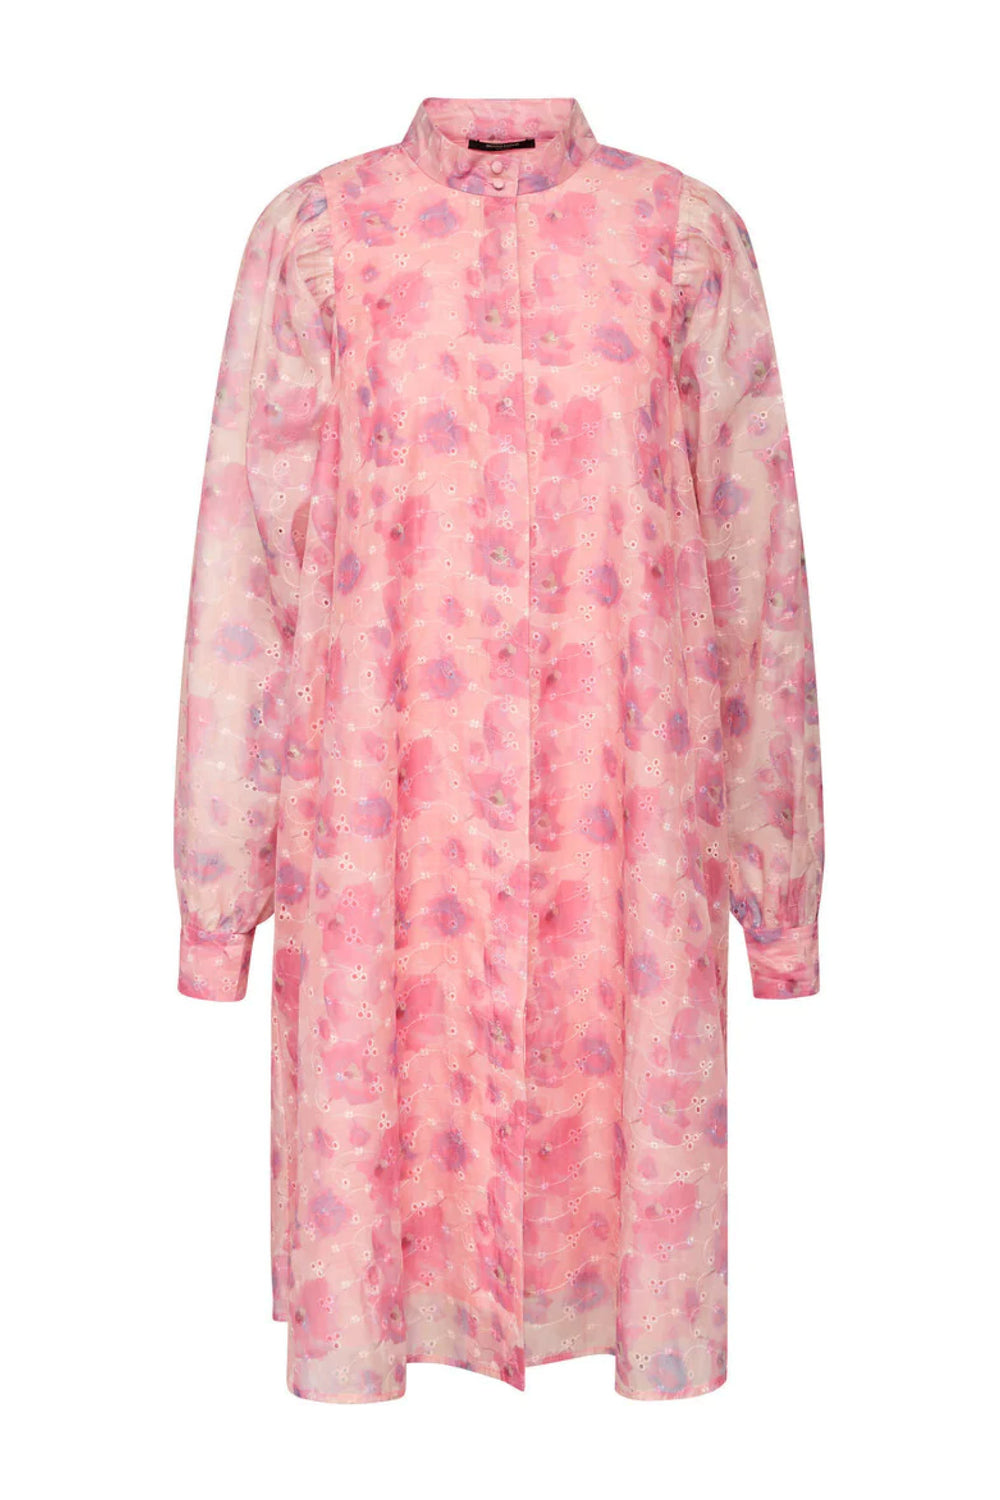 Bruuns Bazaar Women HyssopBBPhilina dress Dress Pink print